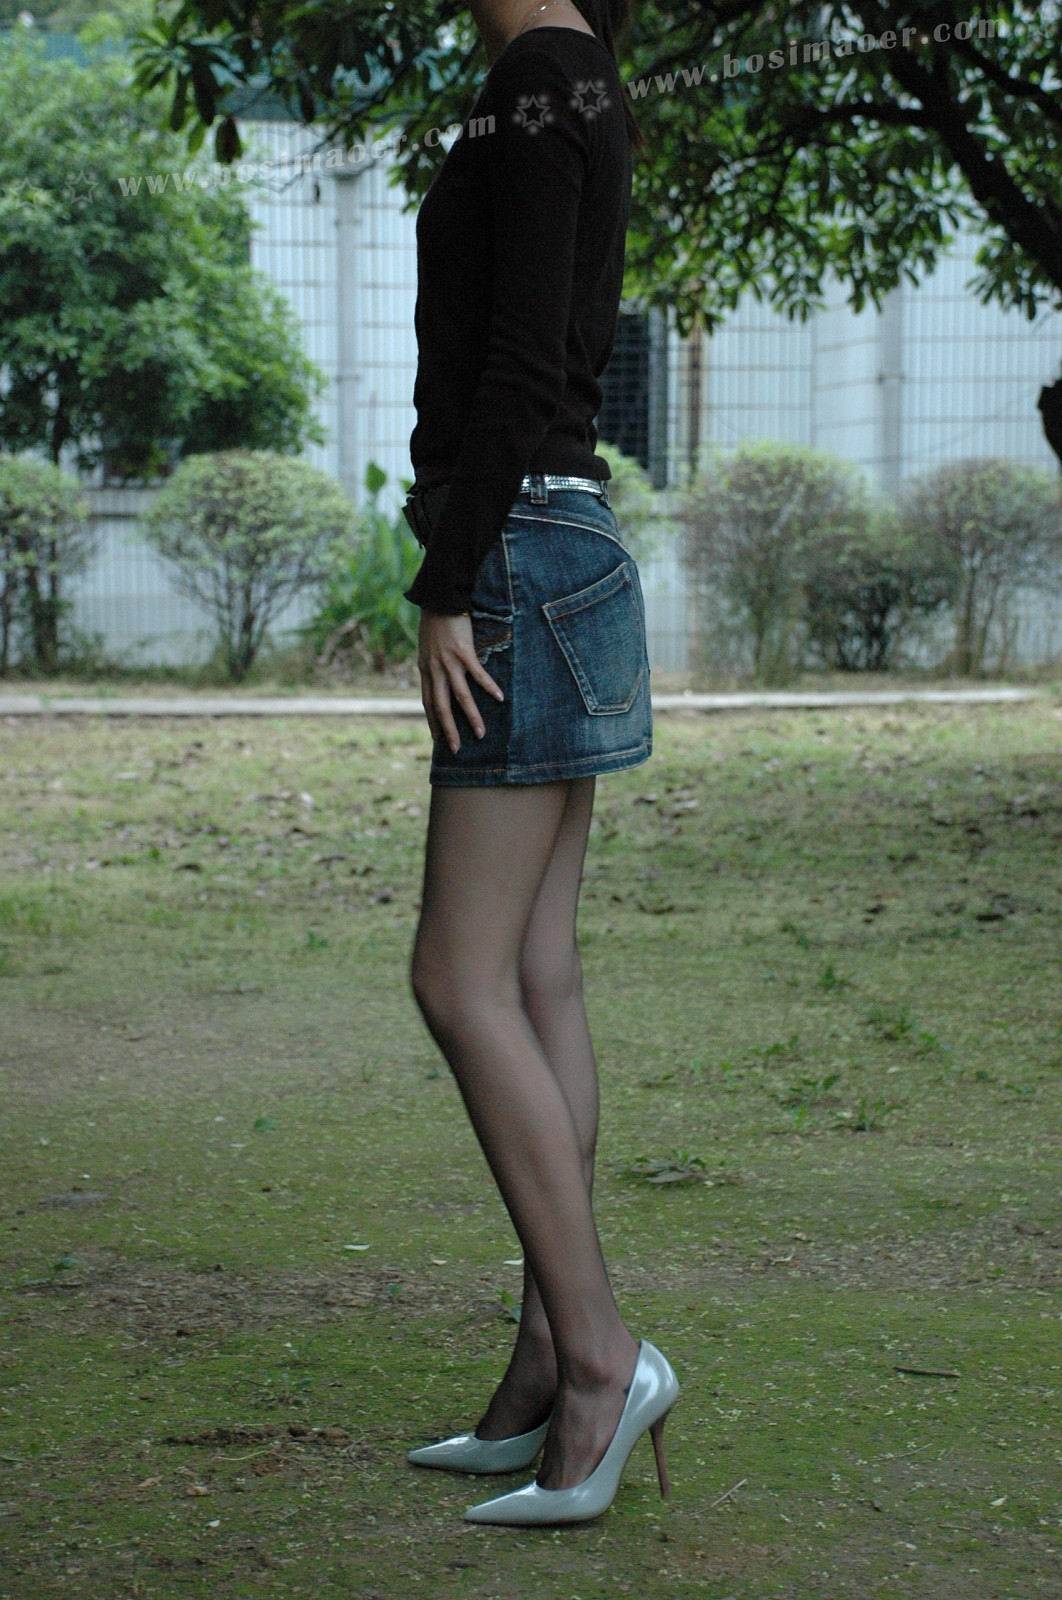 Super short denim skirt black stockings beauty Persian cat part32